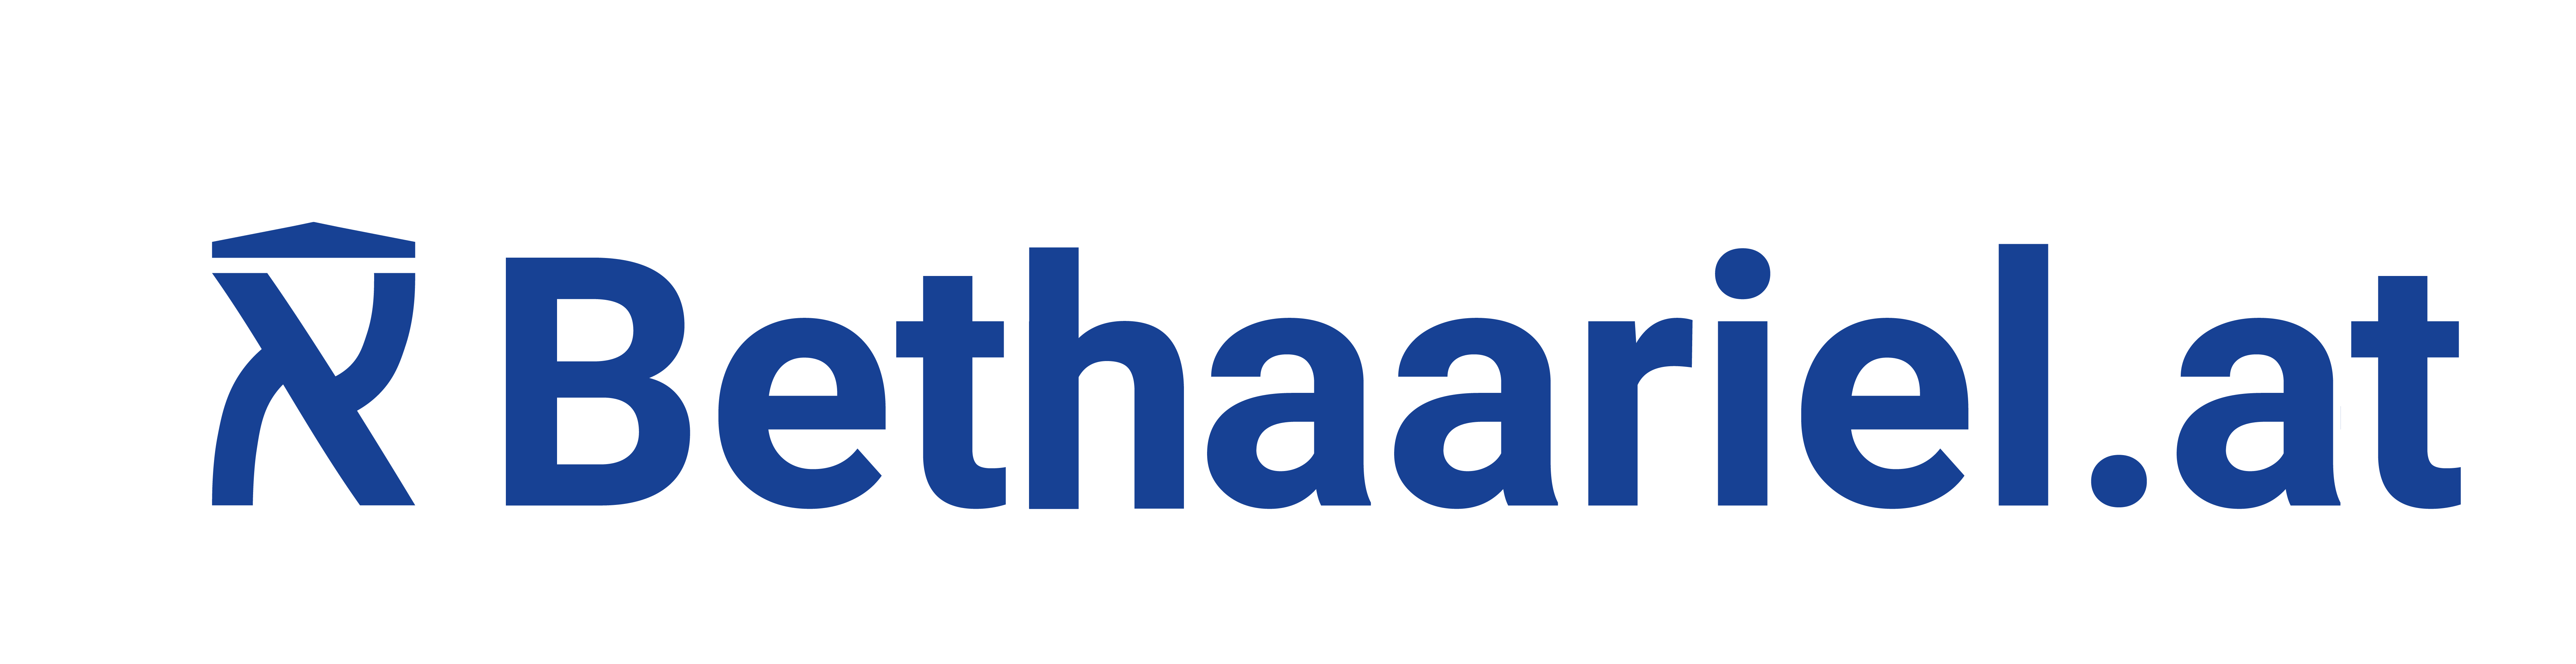 bethaariel_logo-2